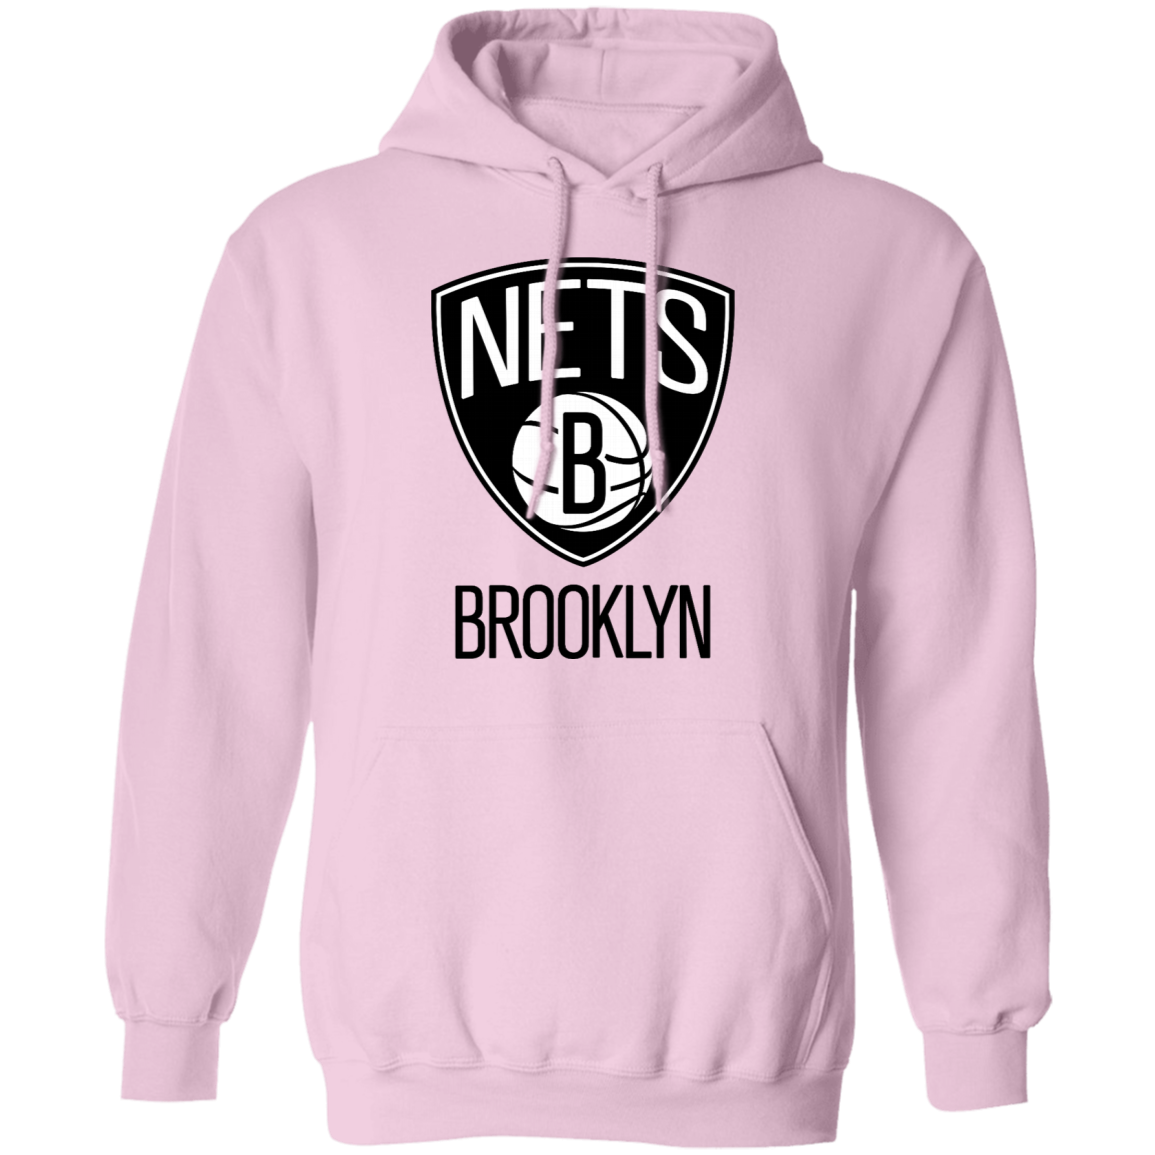 Brooklyn Nets 2021 NBA Playoffs Nets Level shirt, hoodie, sweater